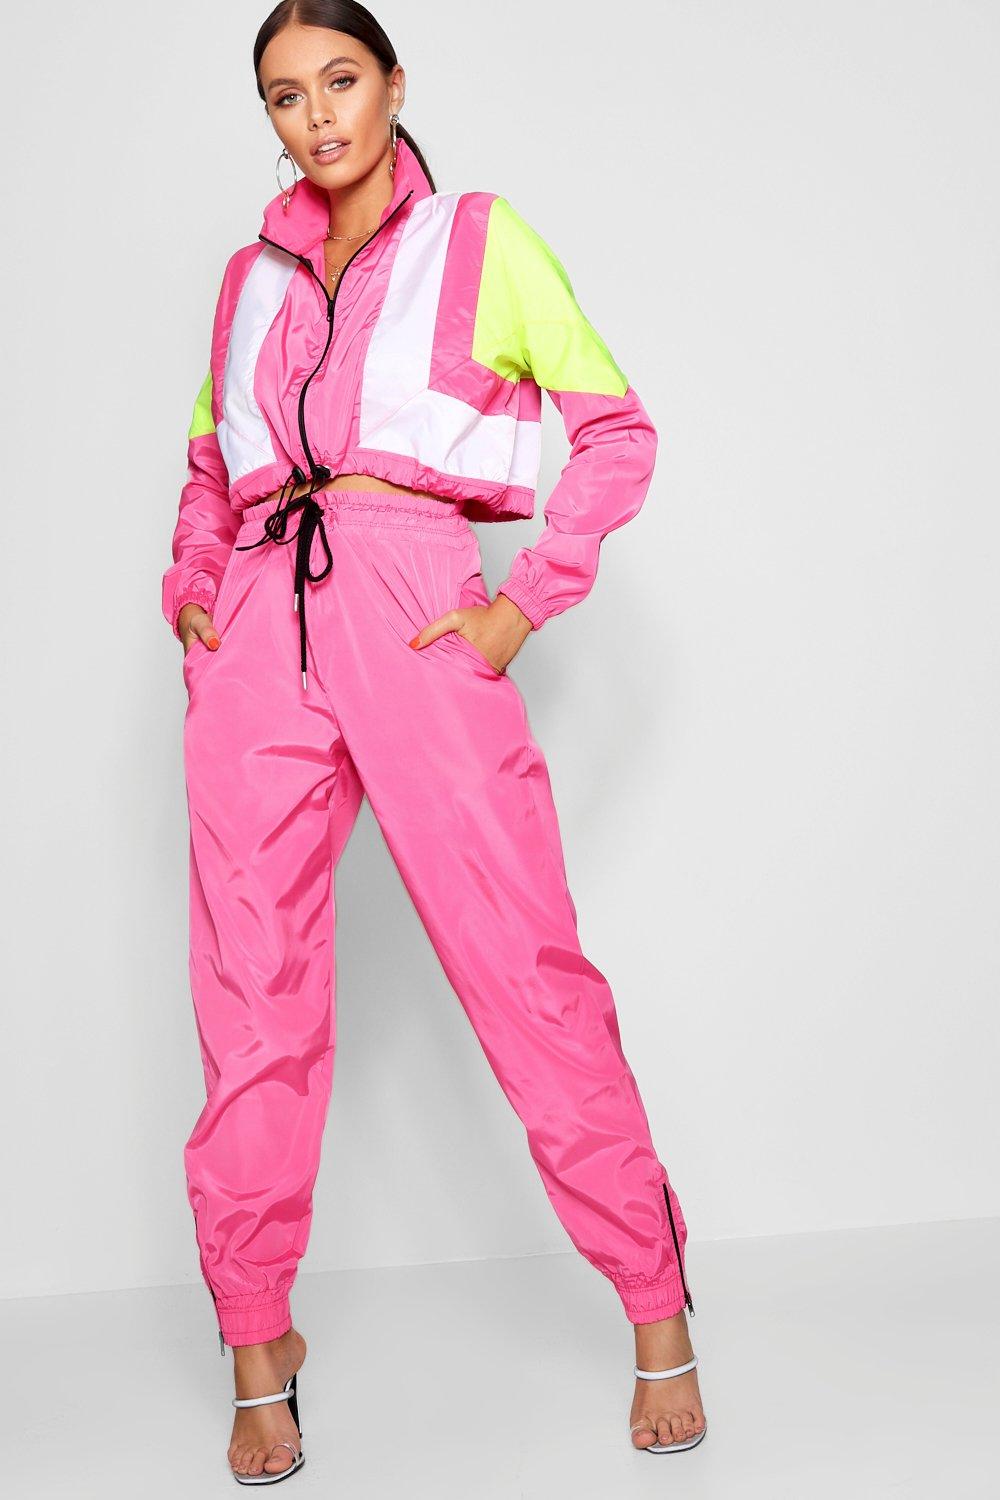 pink joggers suit